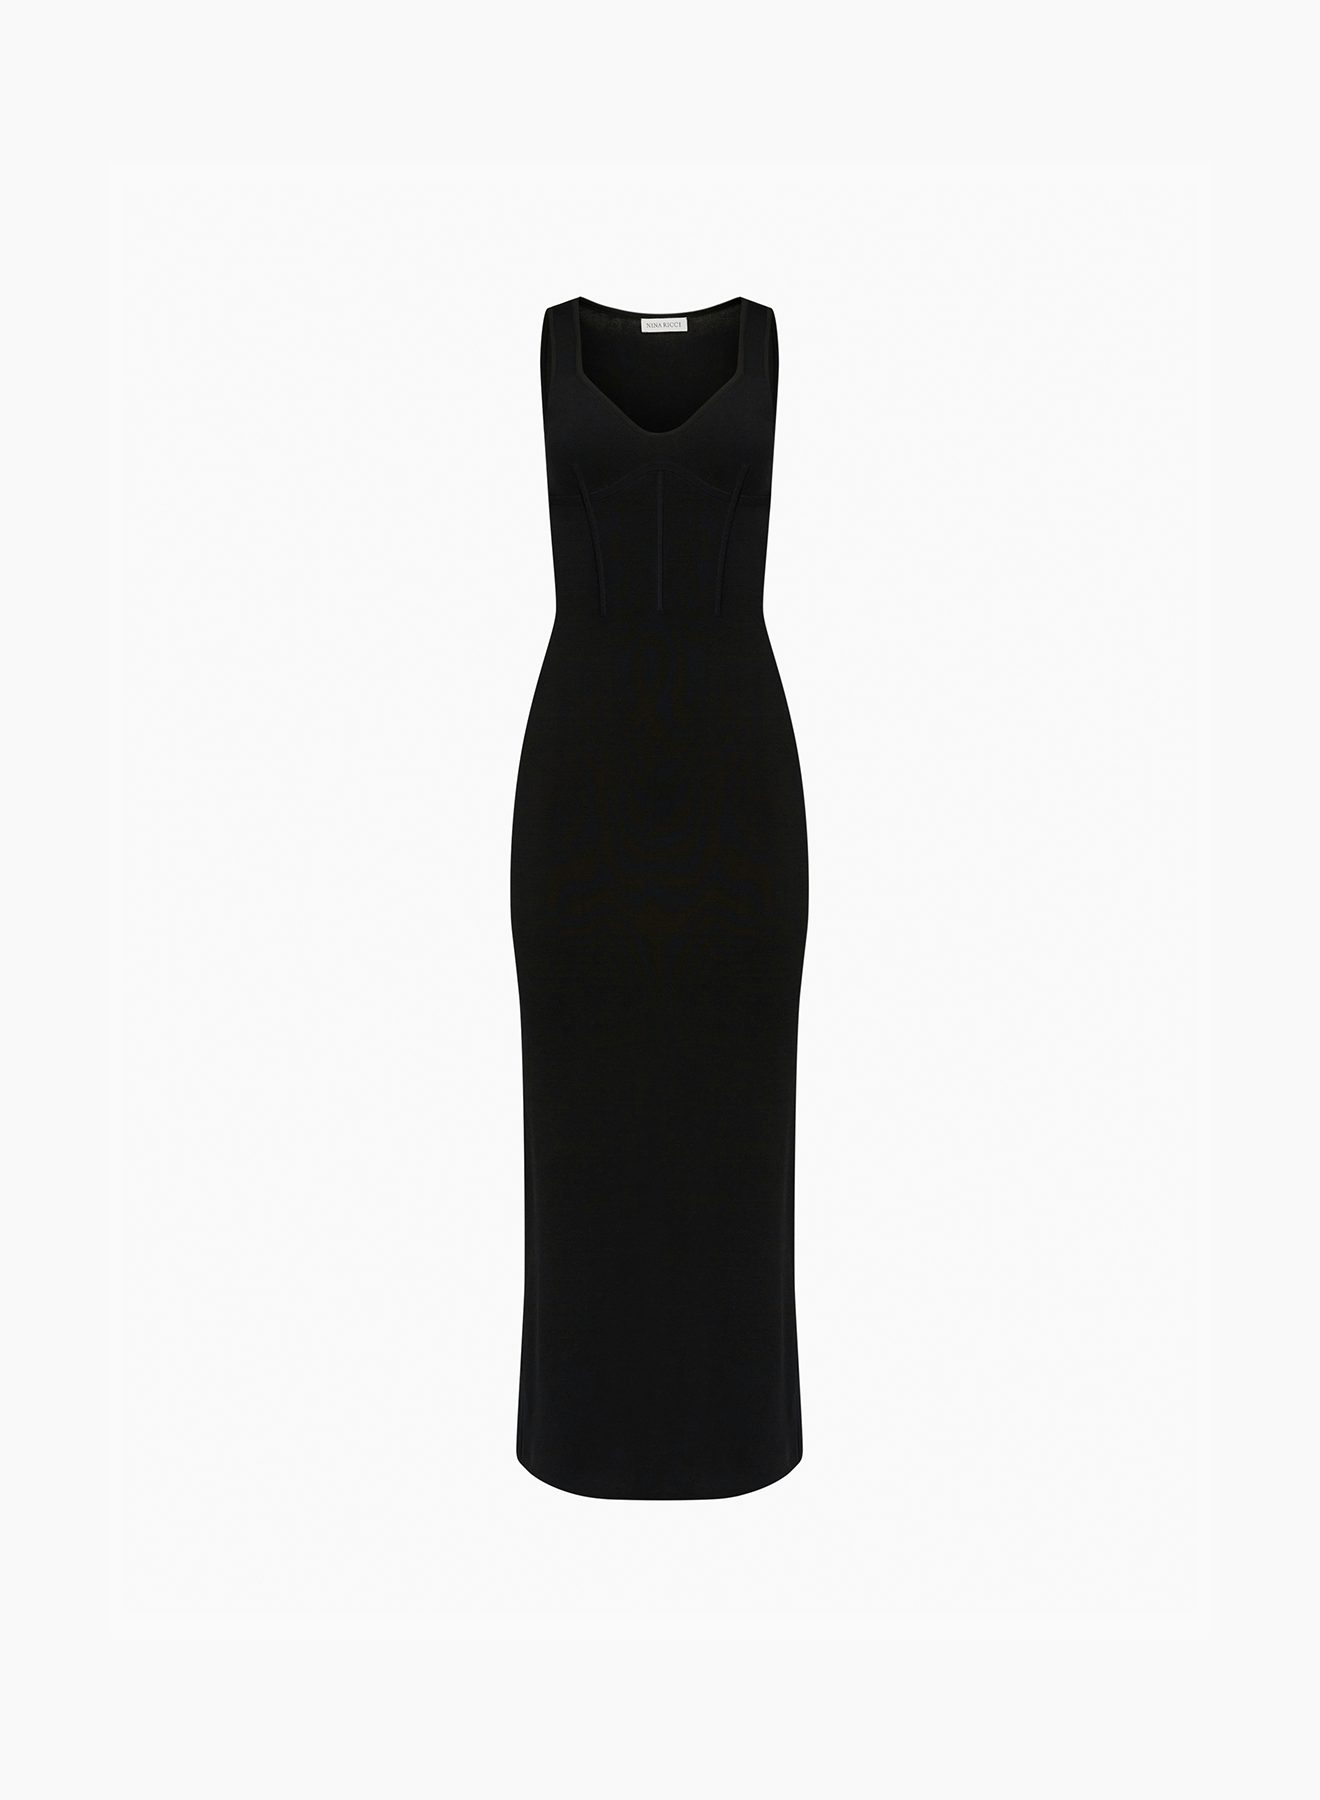 Corset detail dress in black - Nina Ricci